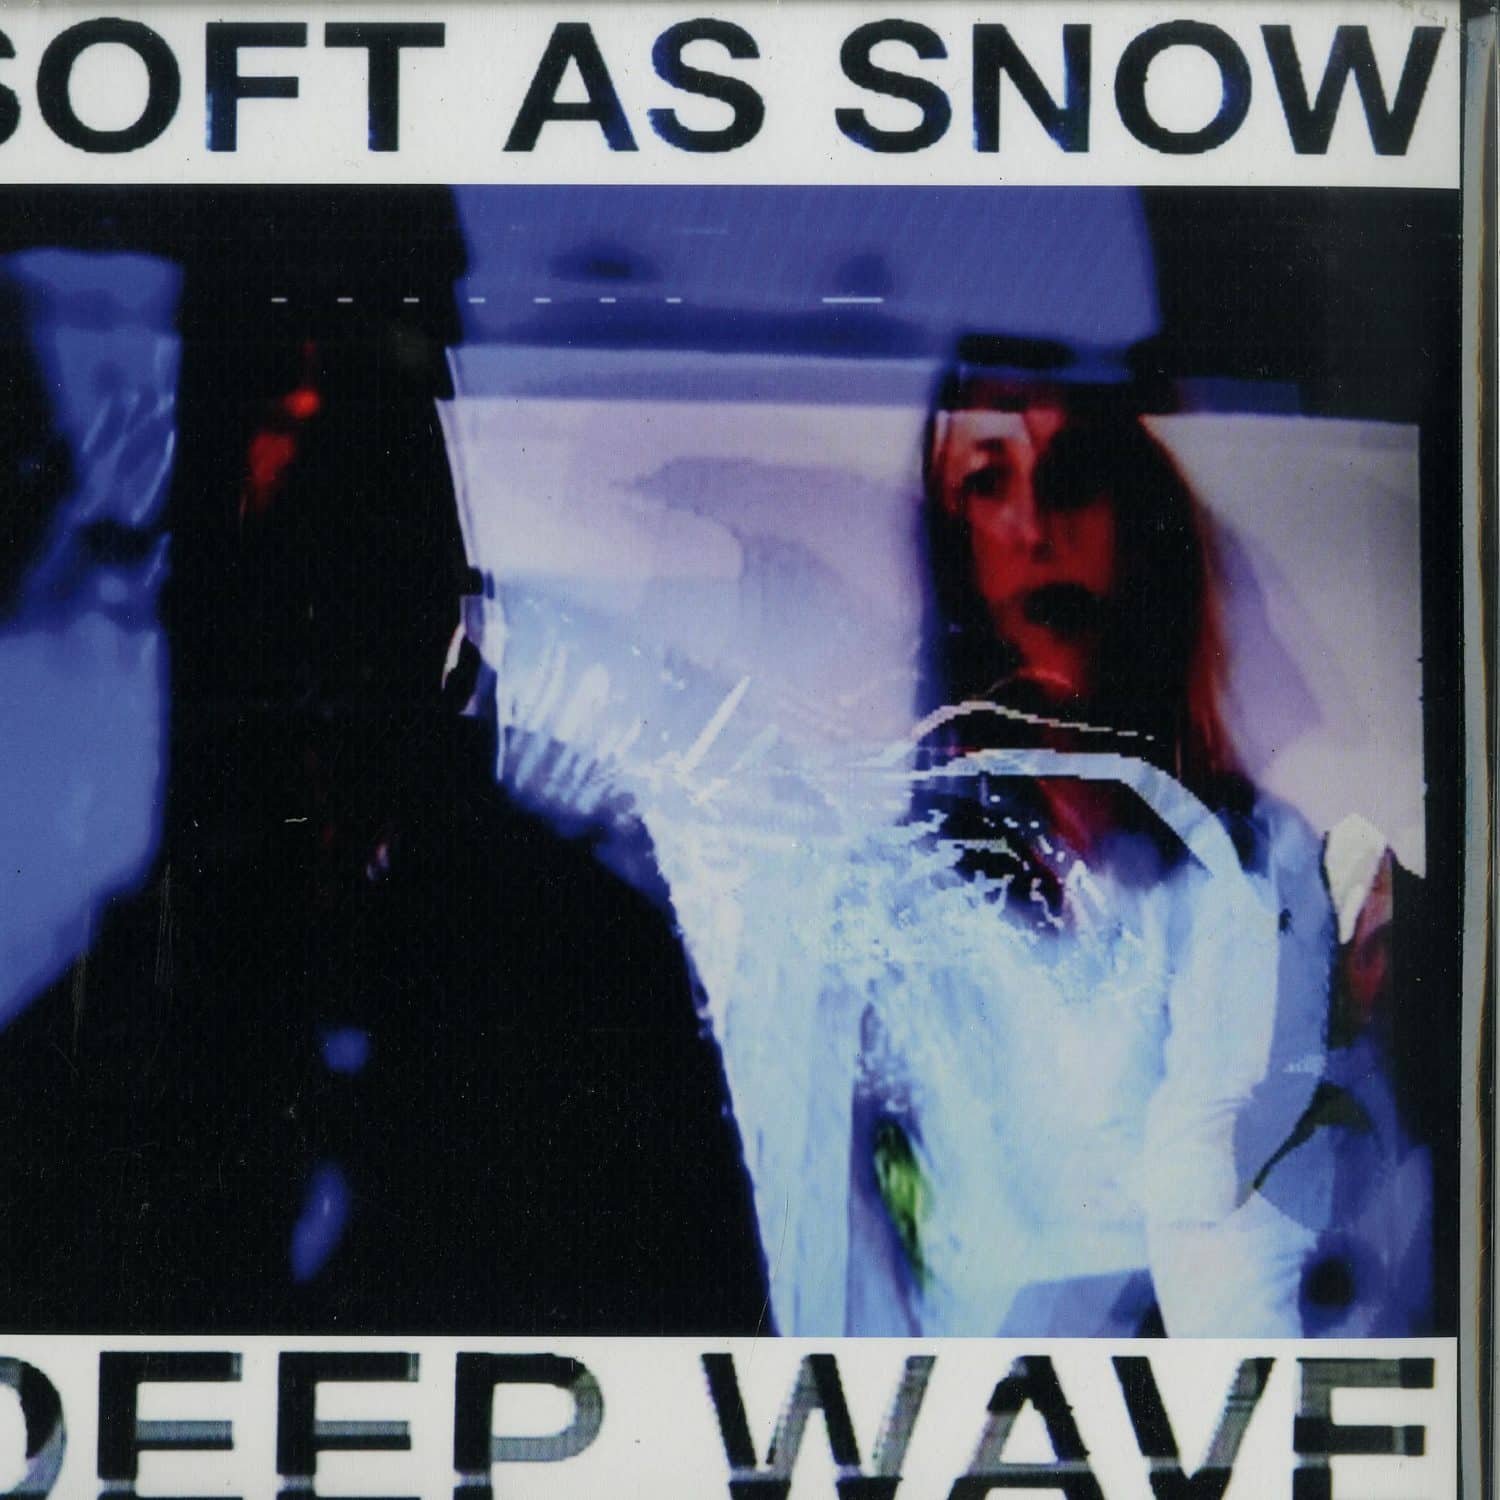 Soft As Snow - DEEP WAVE 